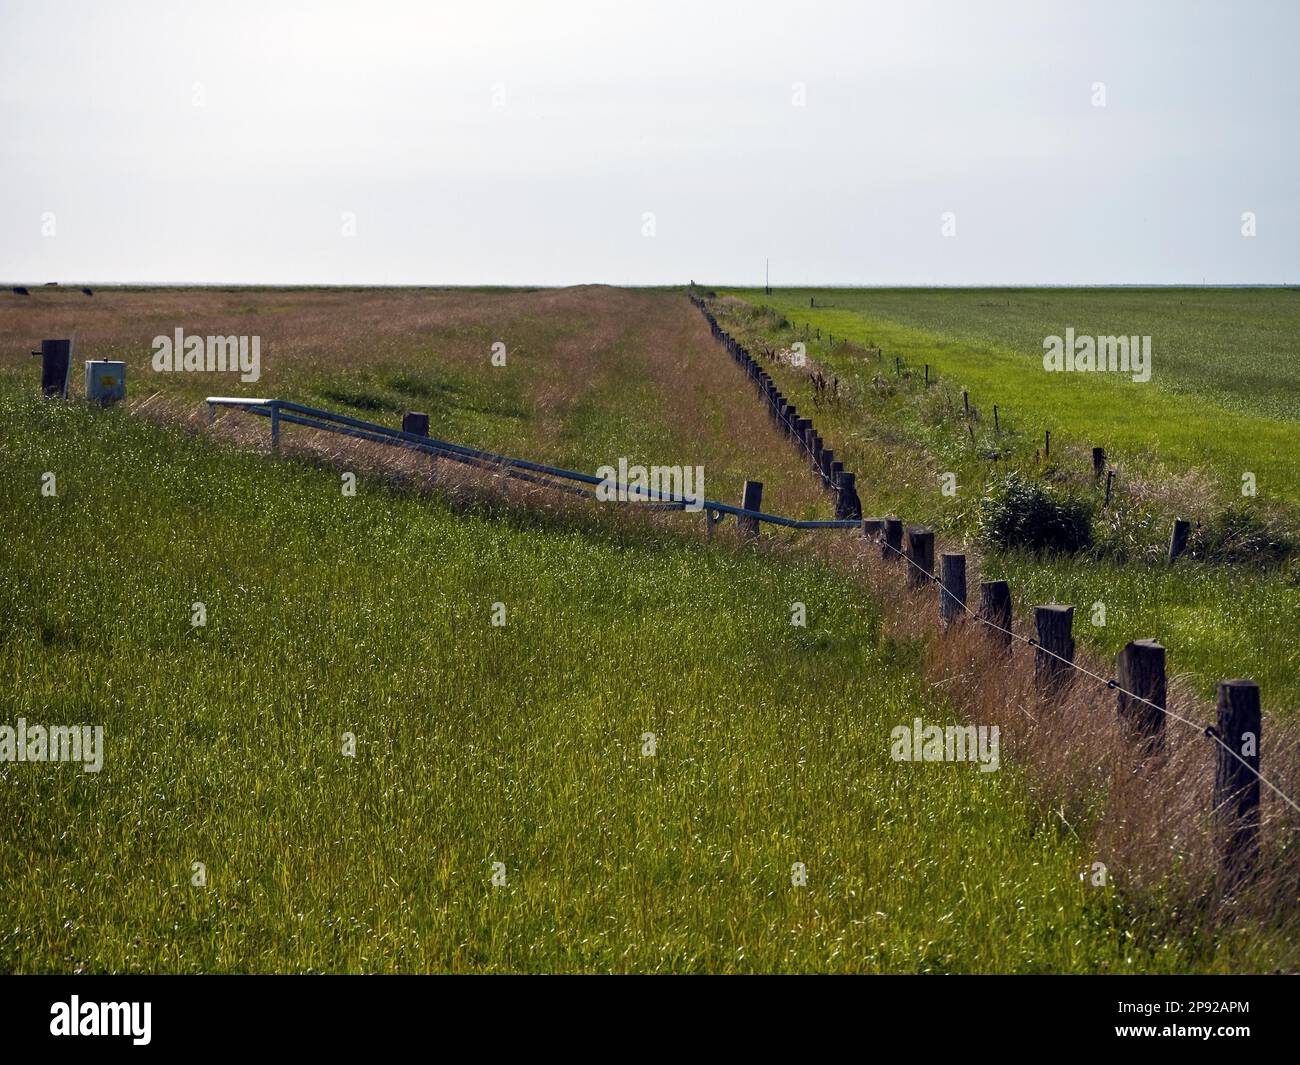 Land reclamation near Dorum, Cuxhaven County, Germany Stock Photo